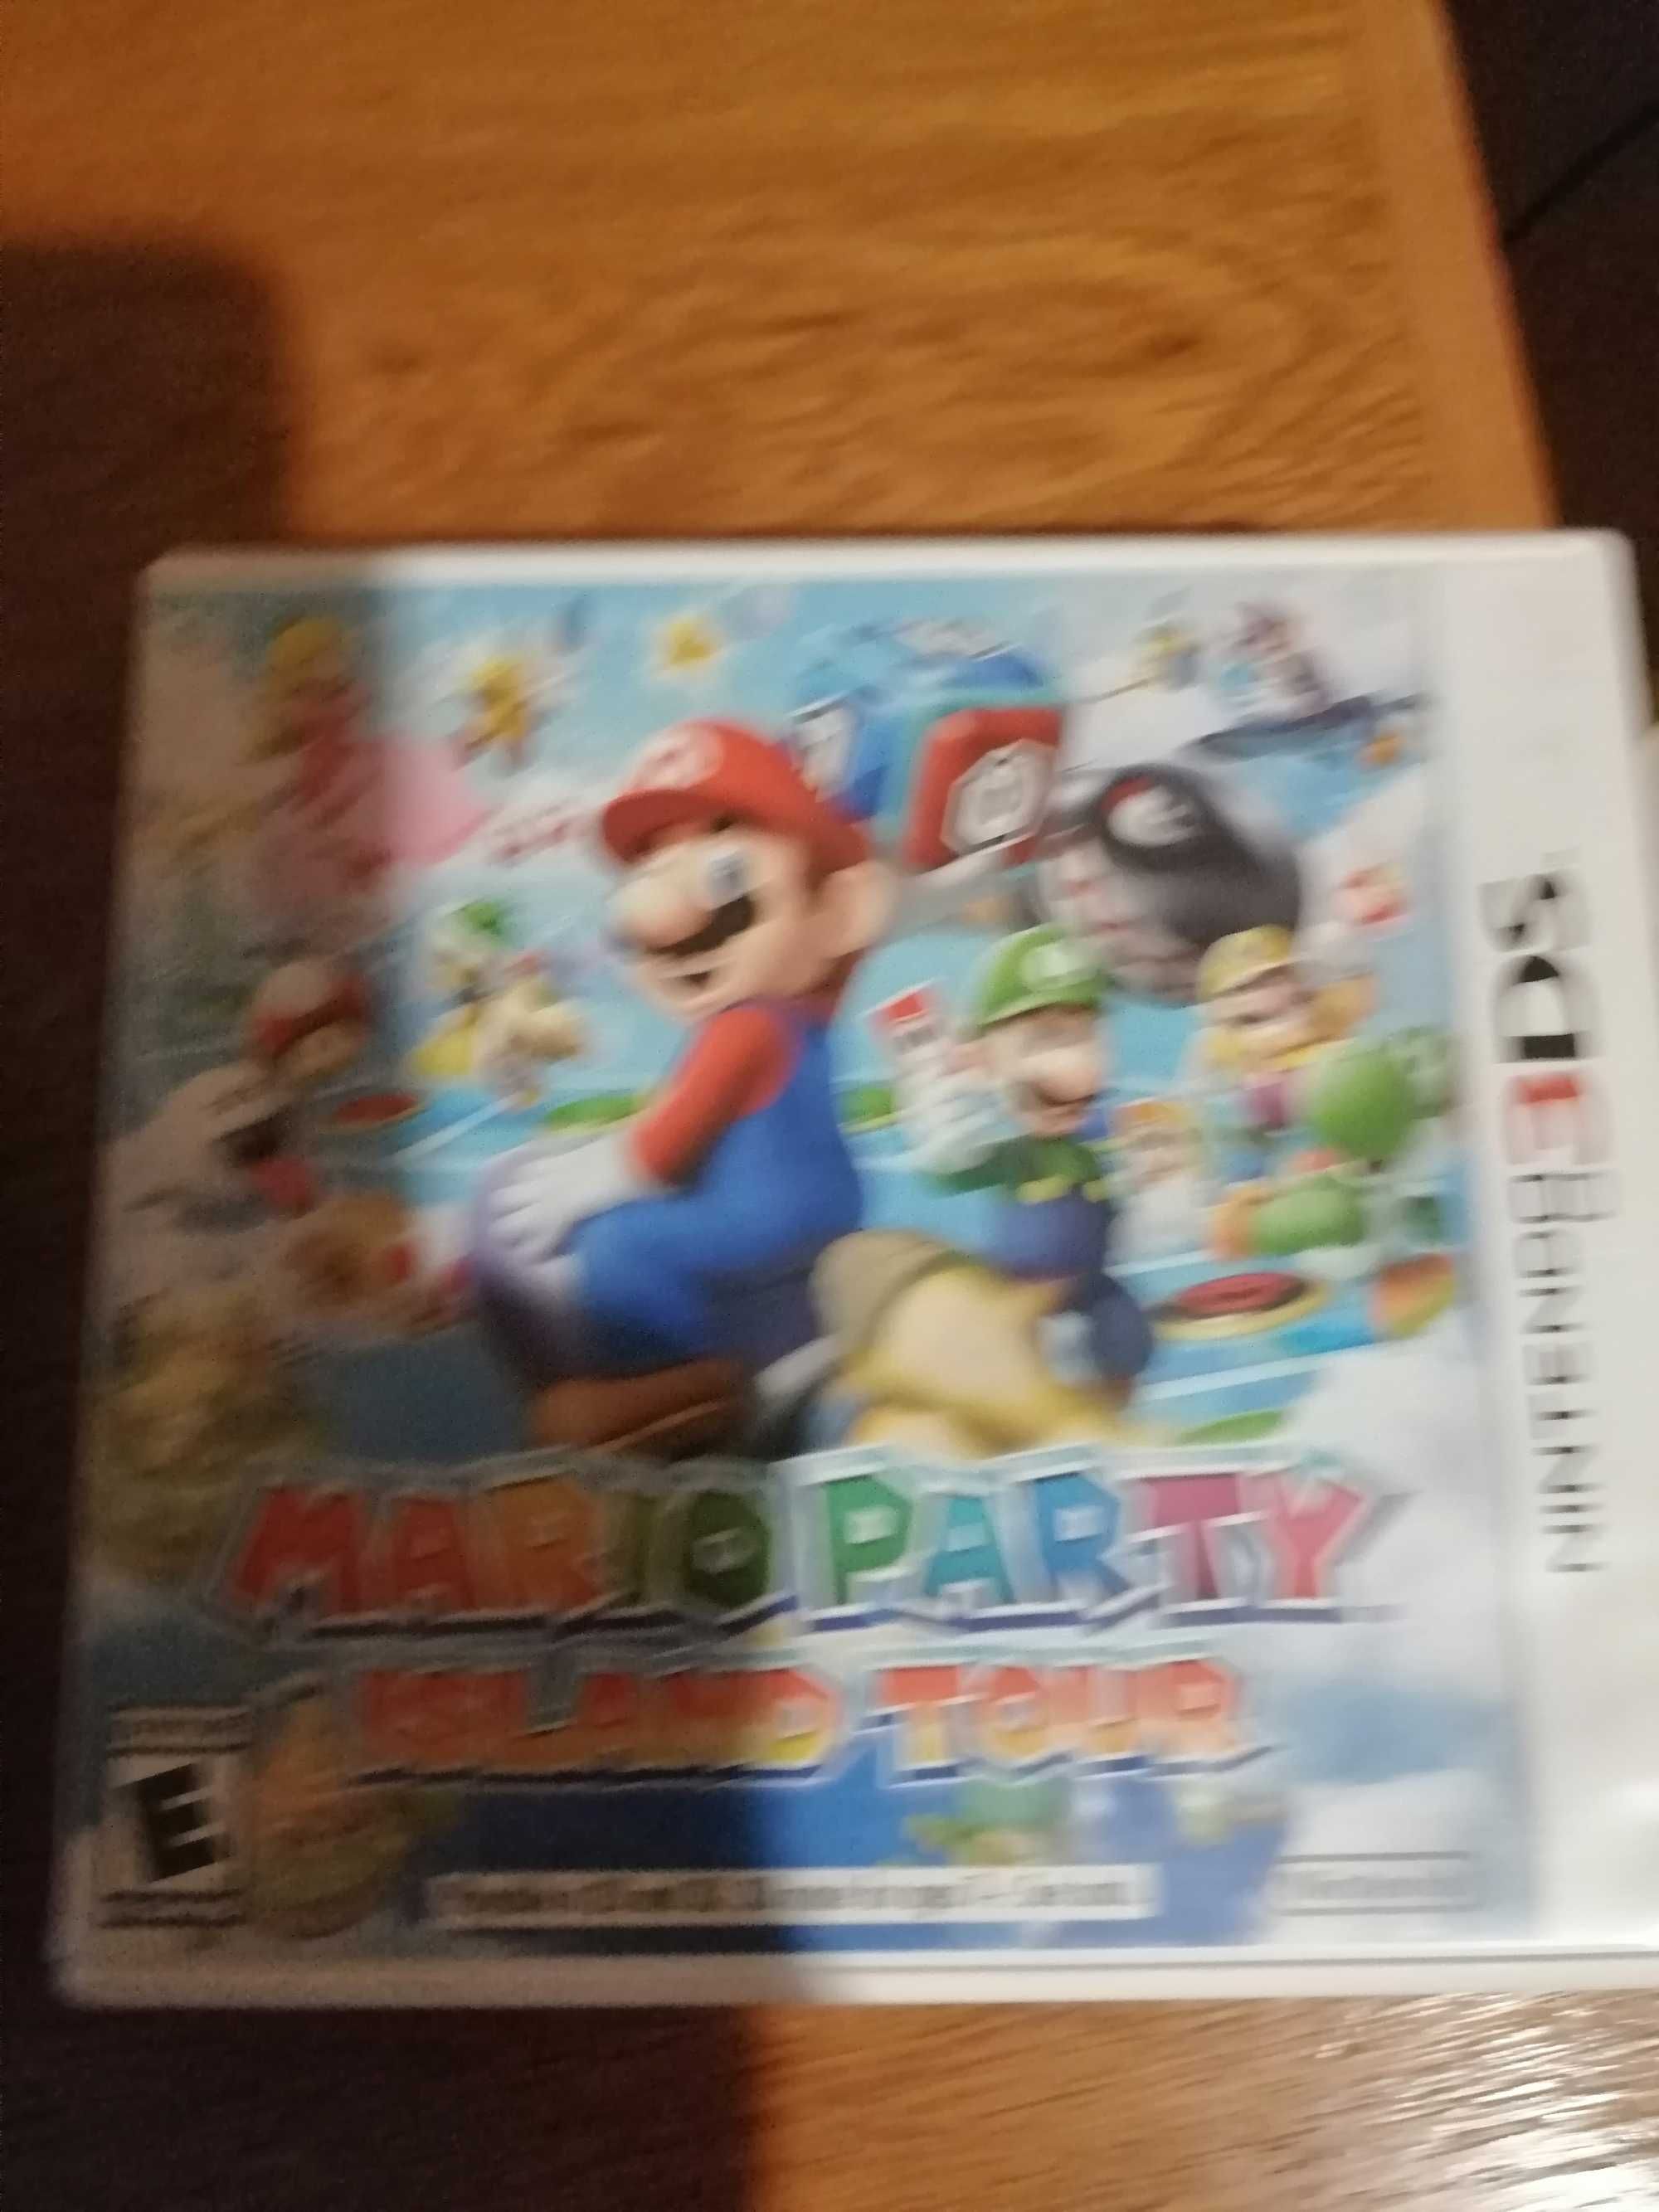 MARIO PARTY Island Tour - Nintendo 3DS